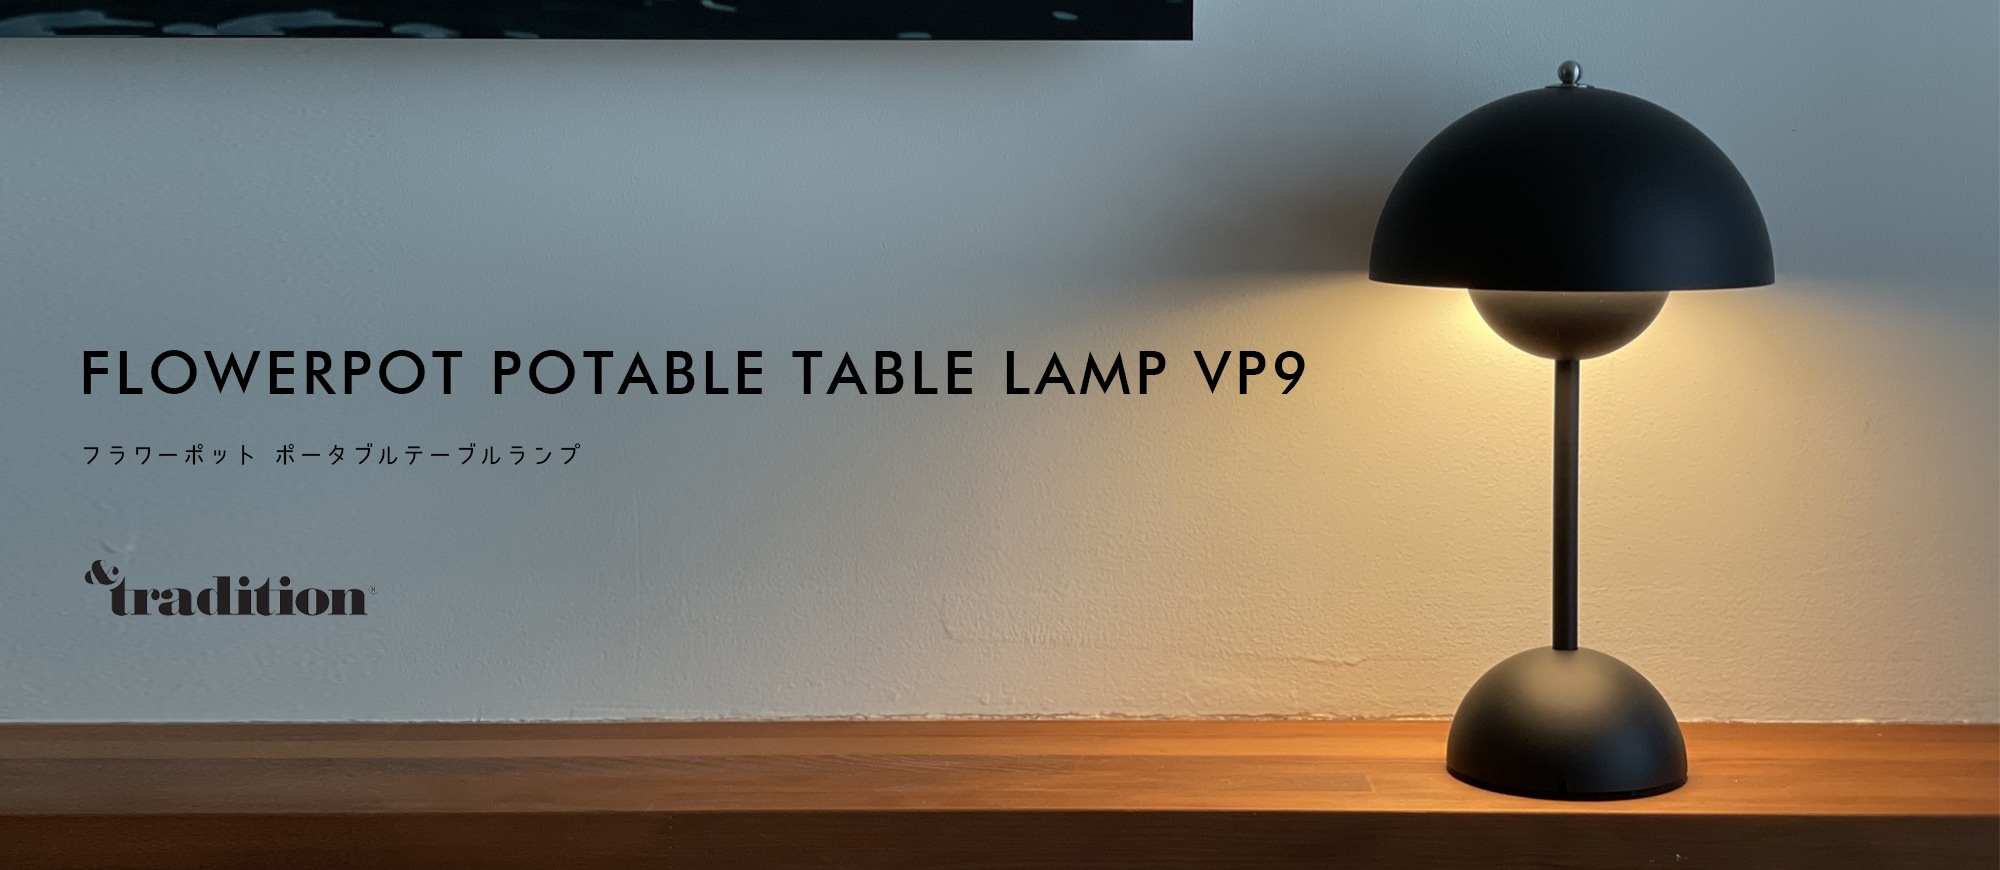 FLOWERPOT POTABLE TABLE LAMP VP9